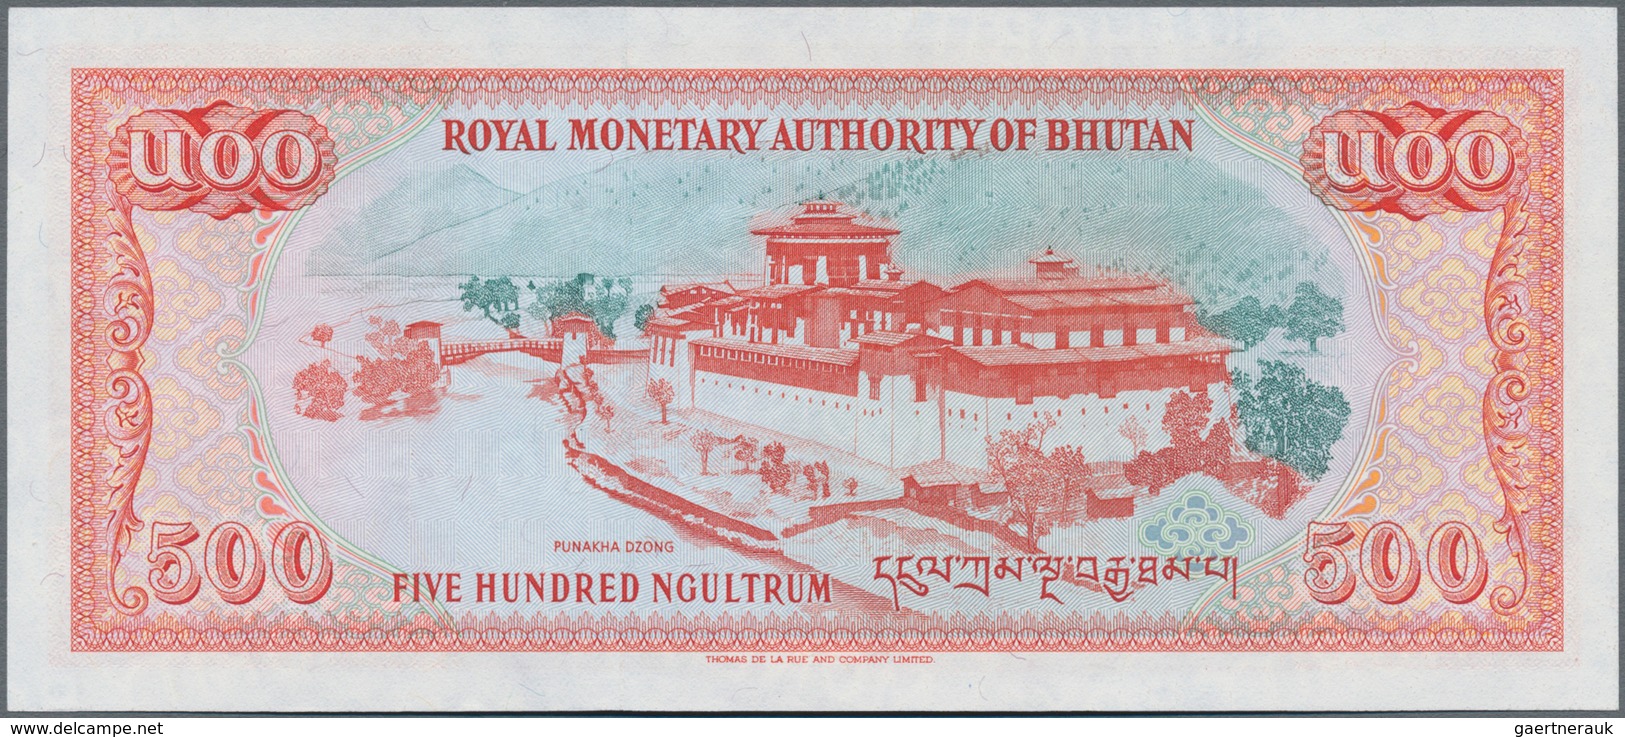 Bhutan: Nice Pair With 10 Ngultrum ND(1974) P.3 (F) And 500 Ngultrum ND(1994) P.21 (UNC). (2 Pcs.) - Bhutan